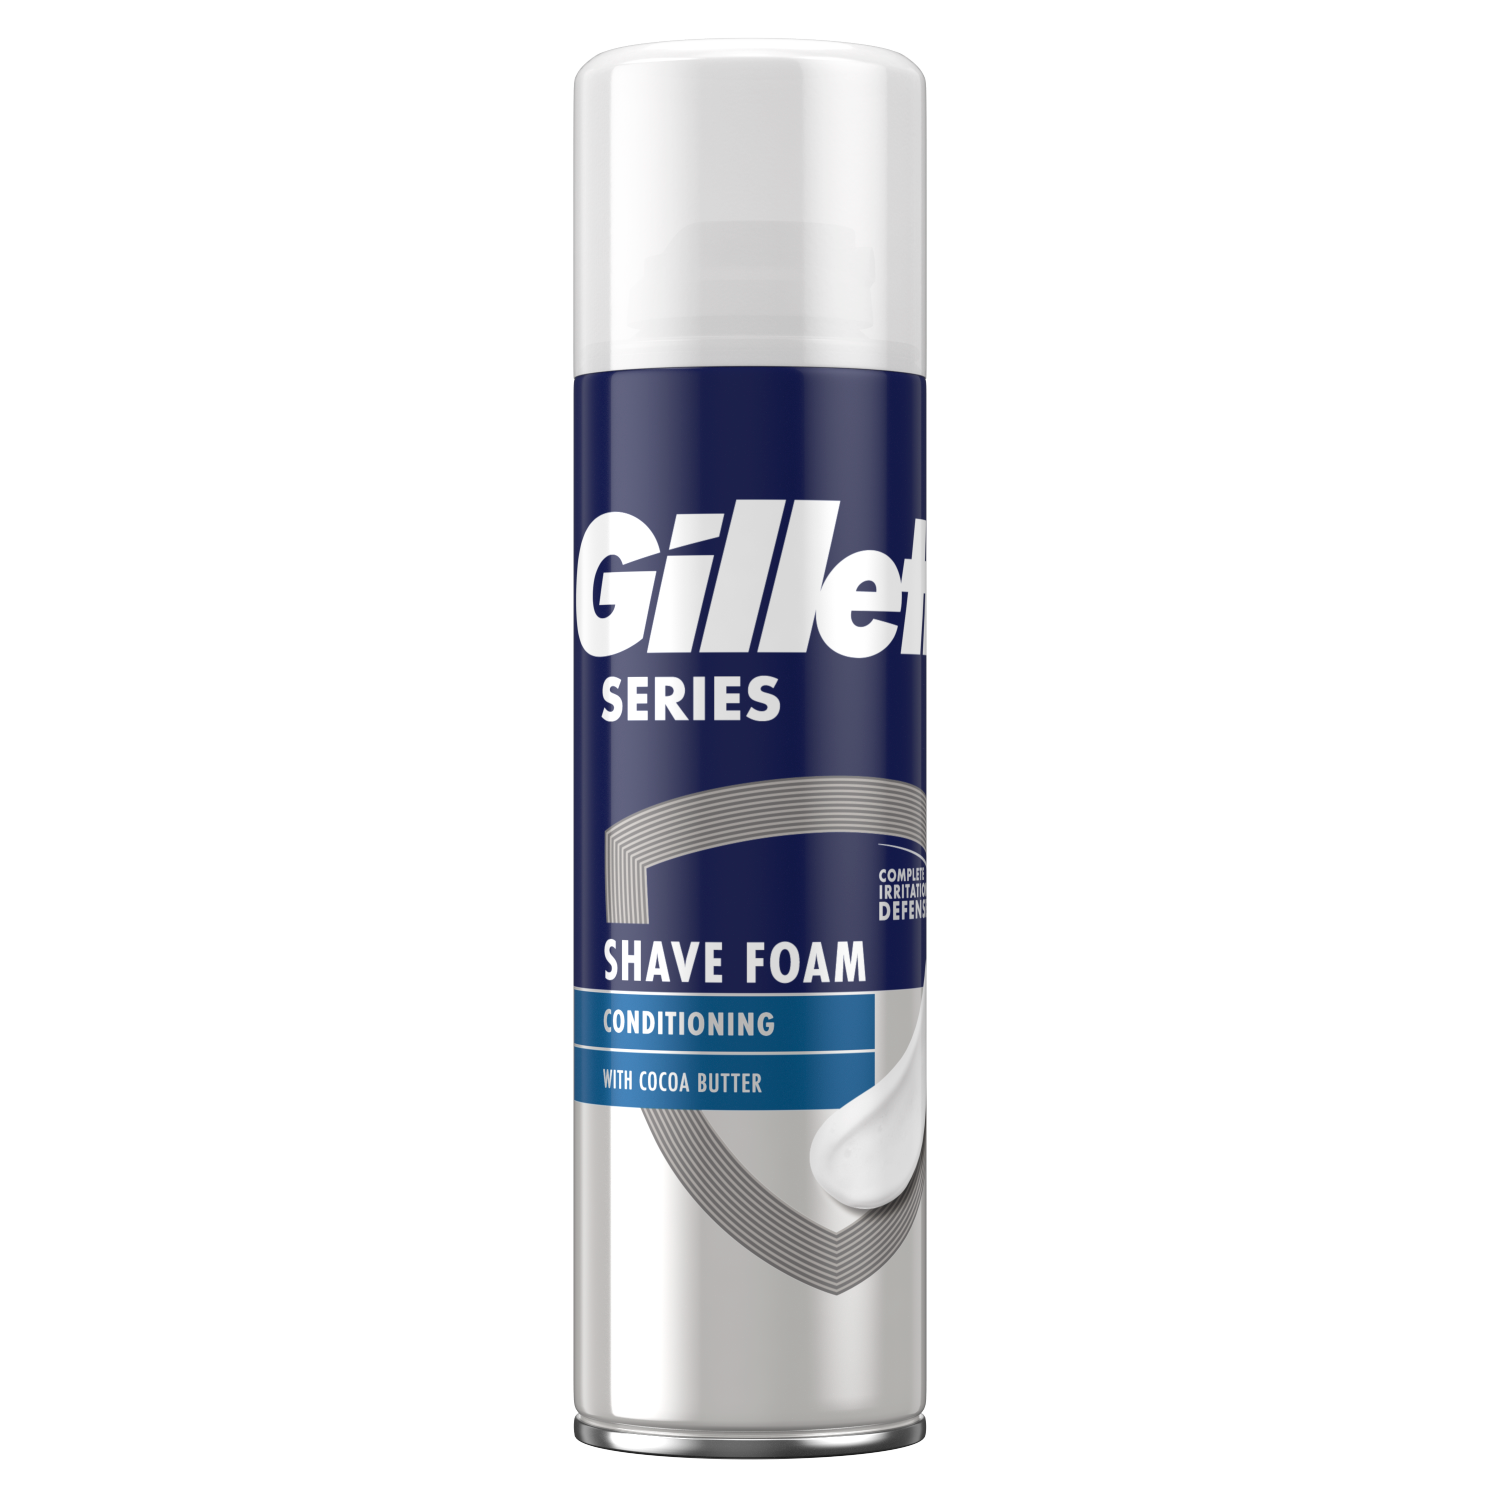 Gillette Series питательная пена для бритья, 250 мл пена для бритья питательная